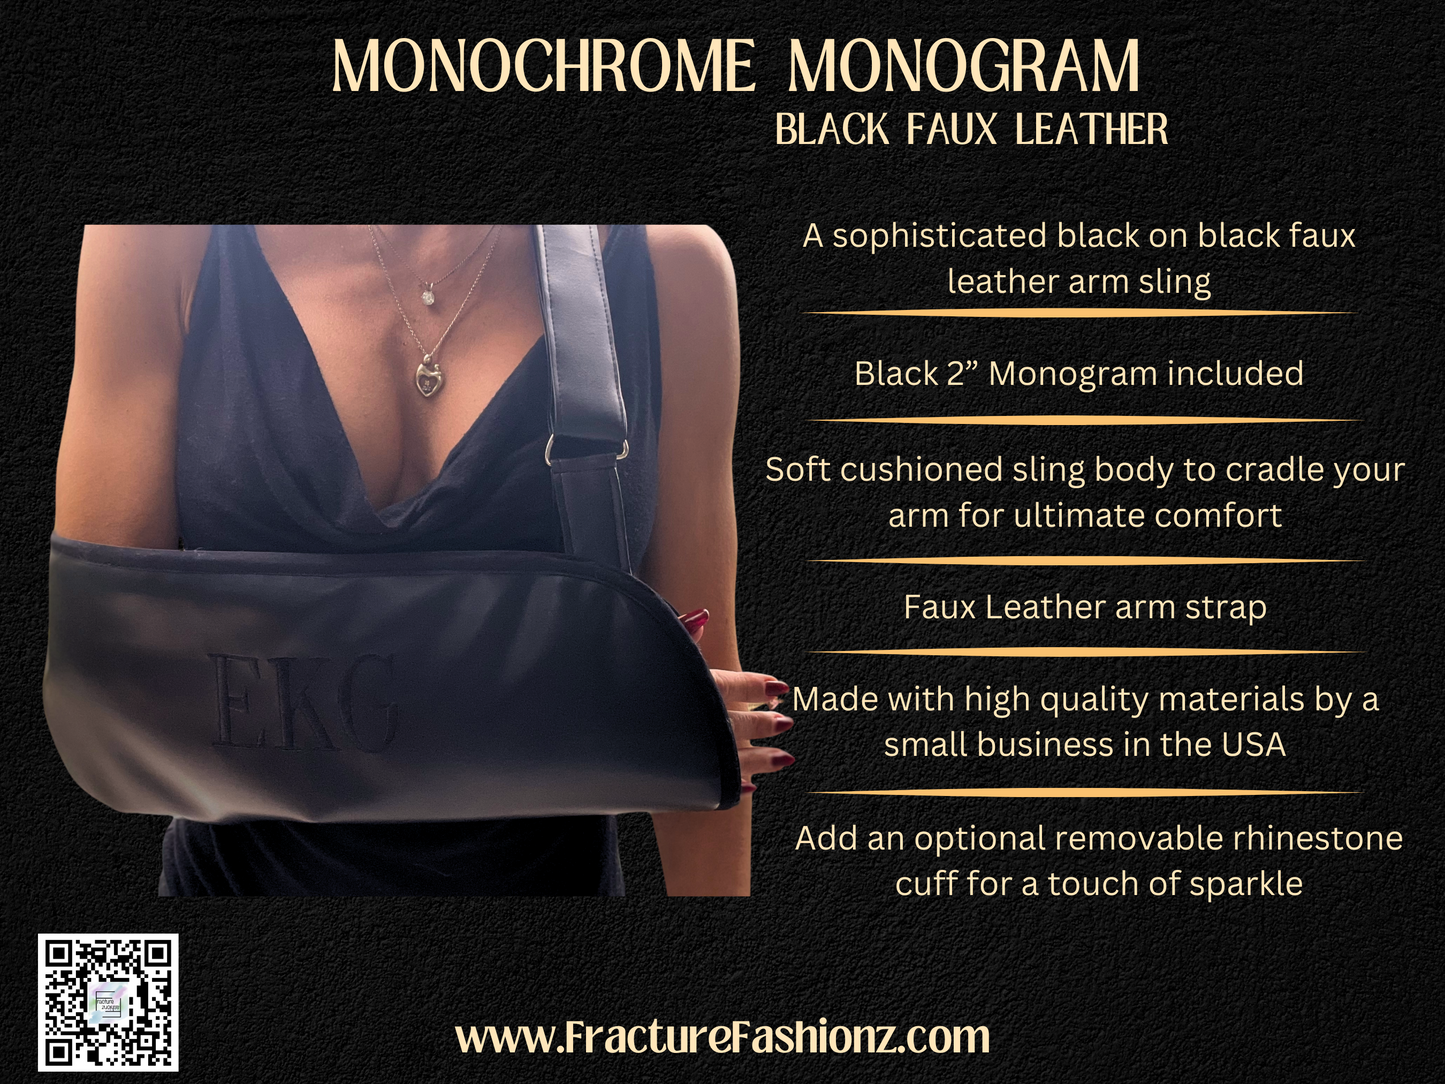 Monochrome Monogram Black Faux Leather Arm Sling